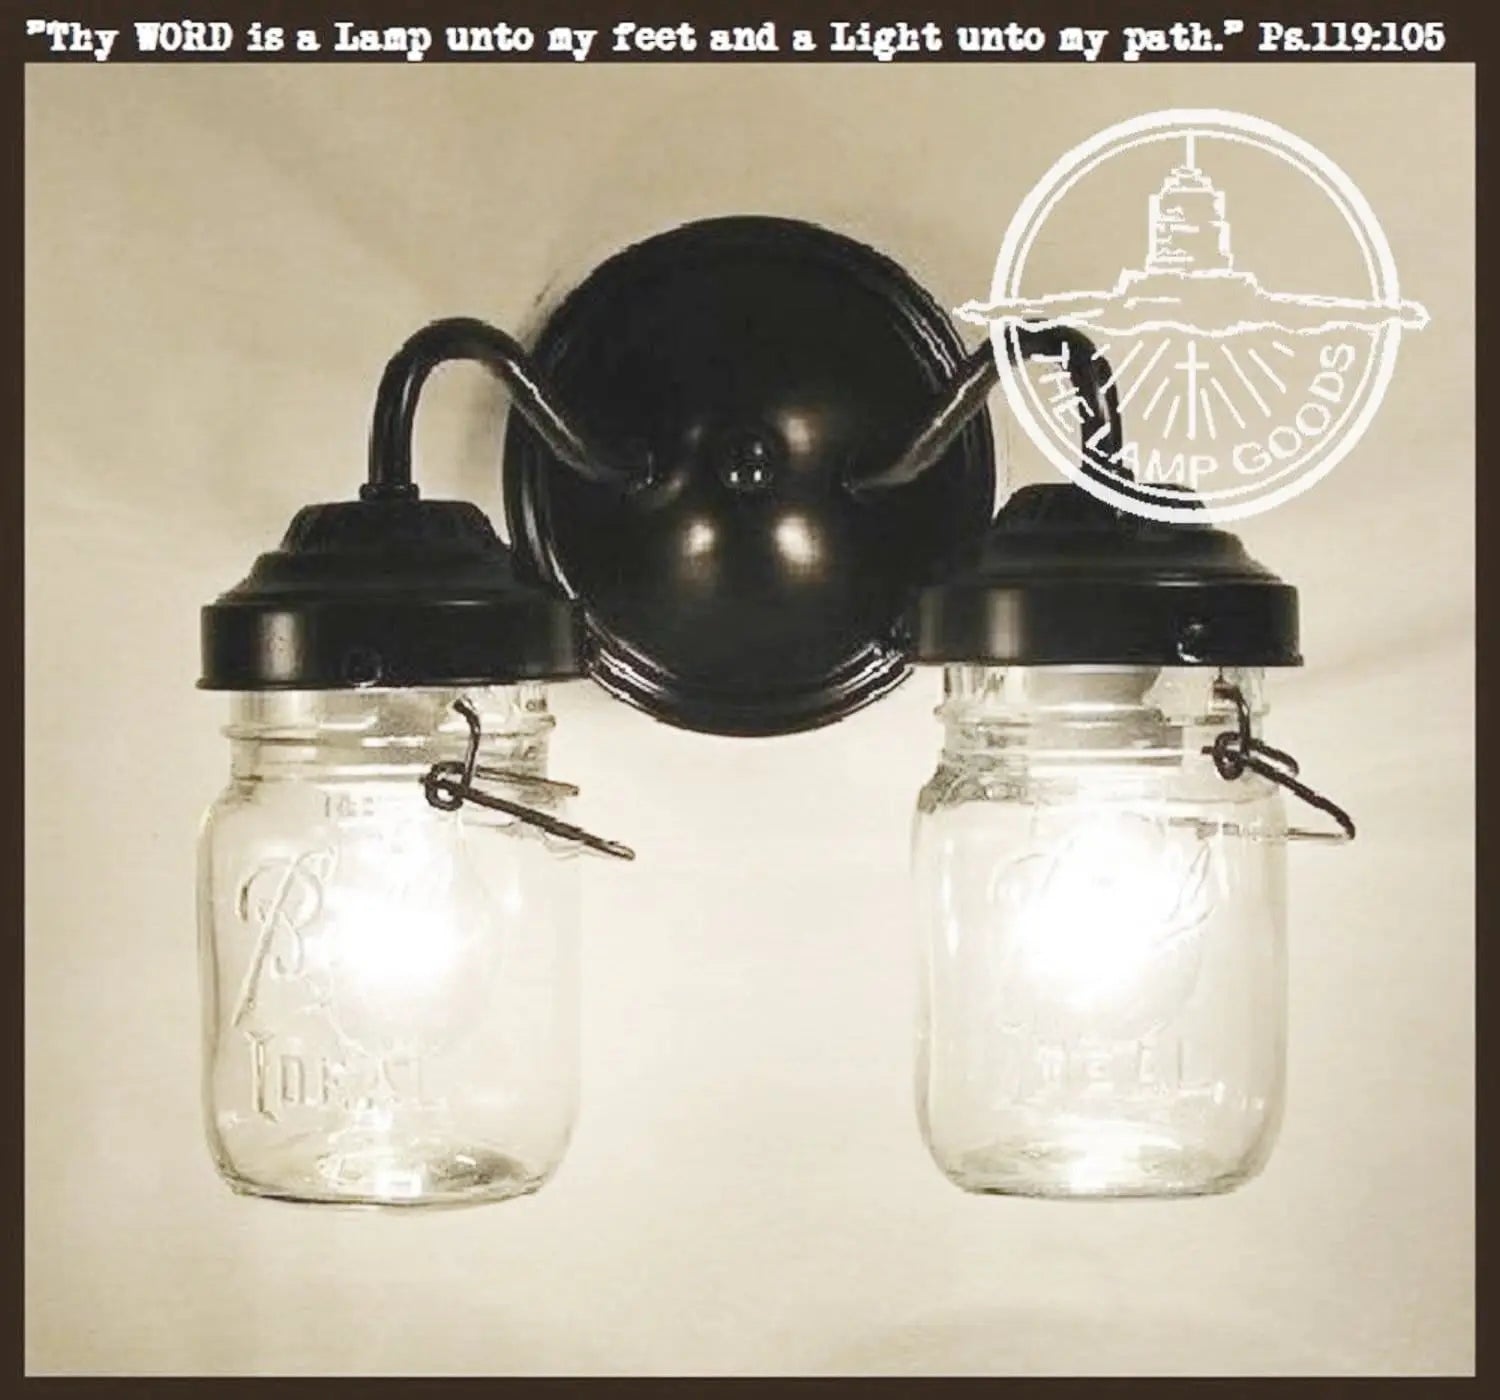 Mason JAR WALL LIGHT DOUBLE VINTAGE PINTS - The Lamp Goods